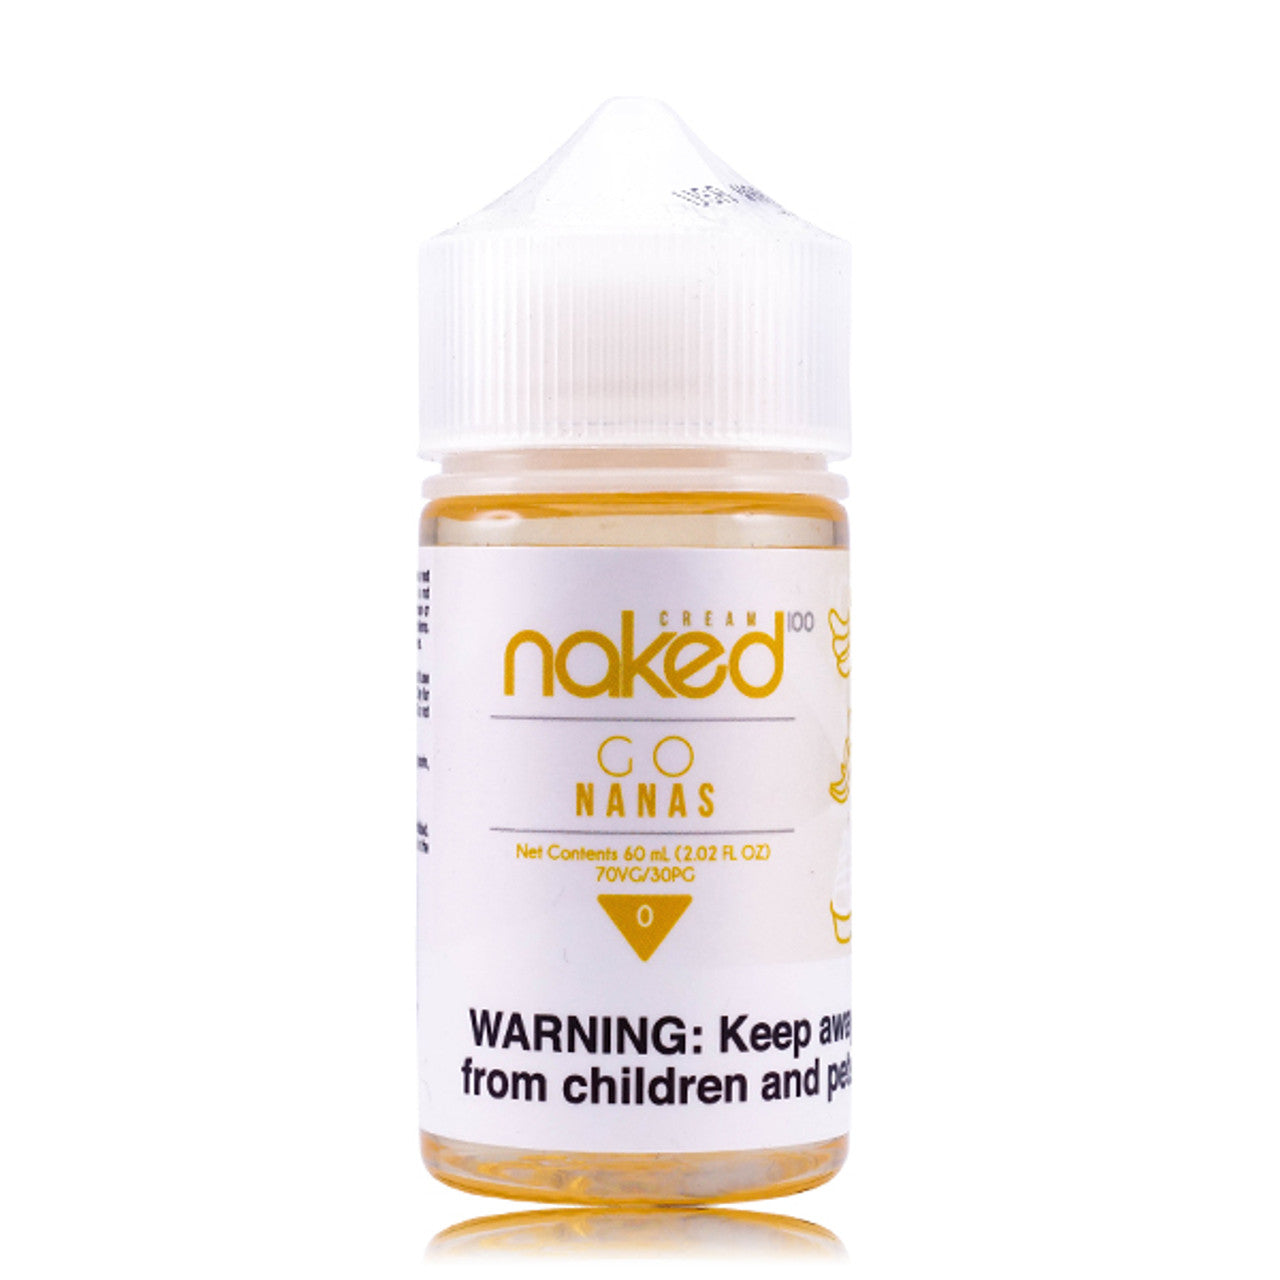 Naked 100 E-Liquid 60mL (Freebase) |  Cream Banana Go Nanas